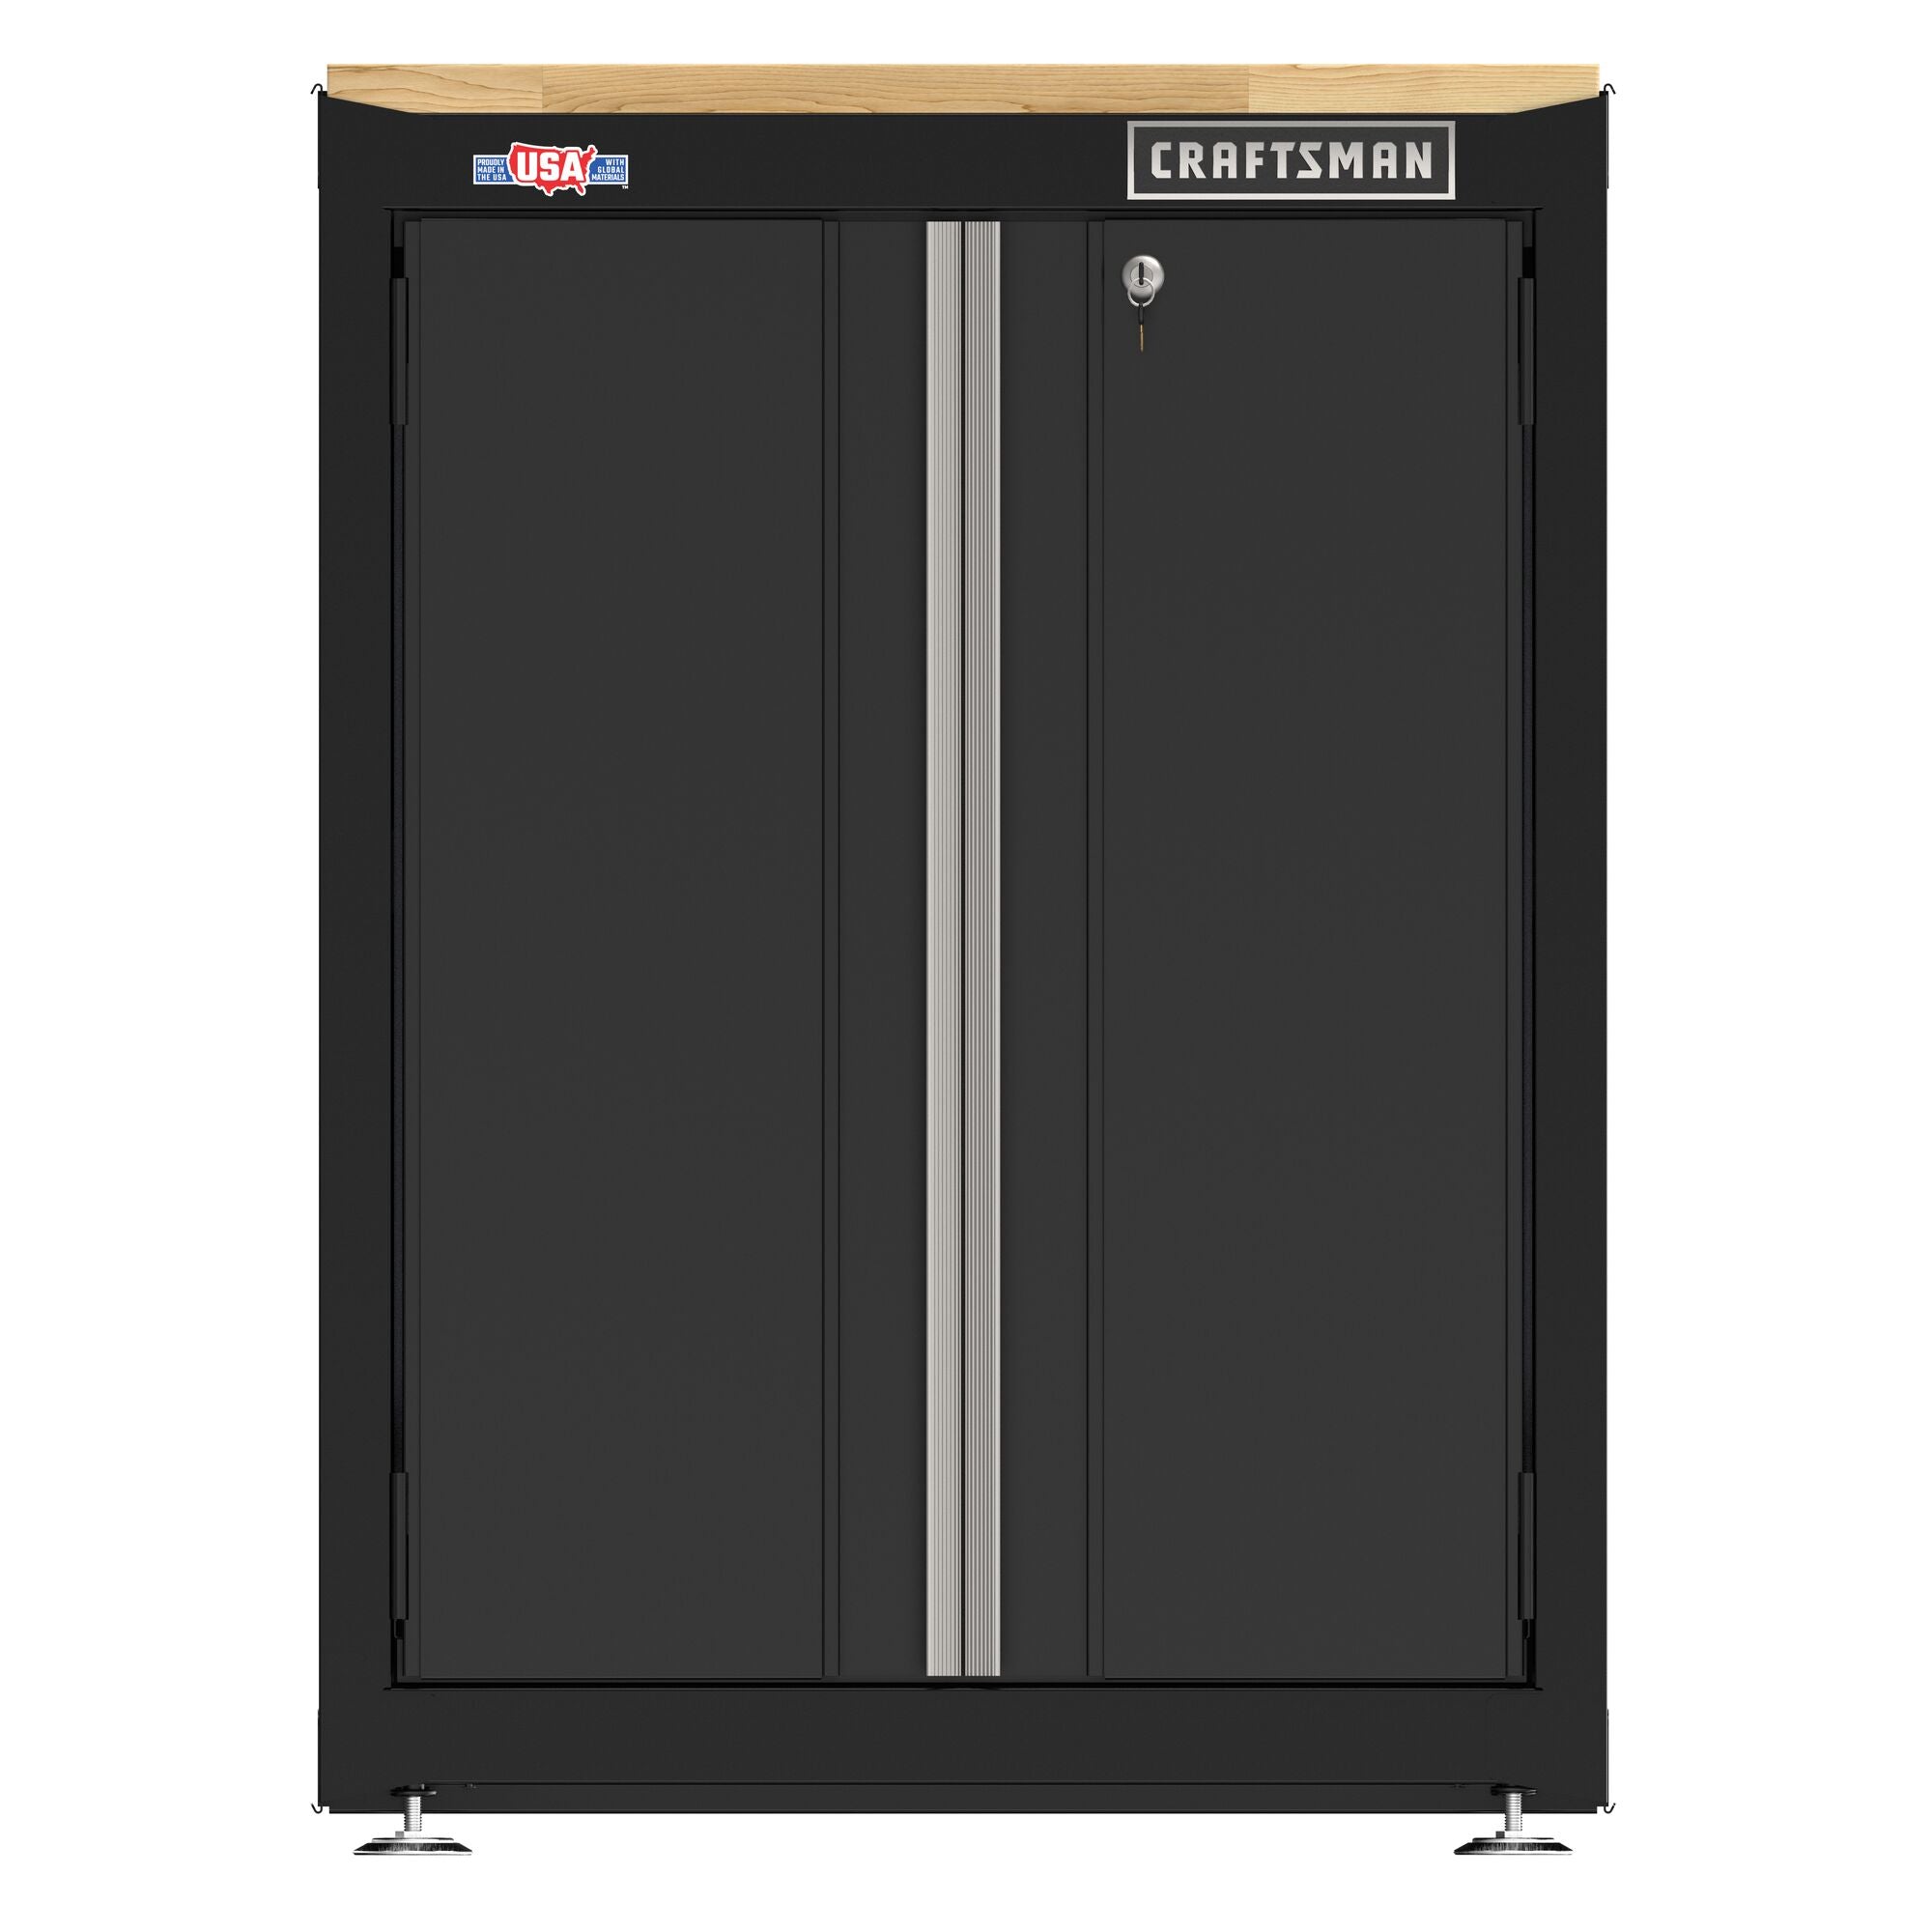 CRAFTSMAN 26.5-in wide 2-door base cabinet straight forward view